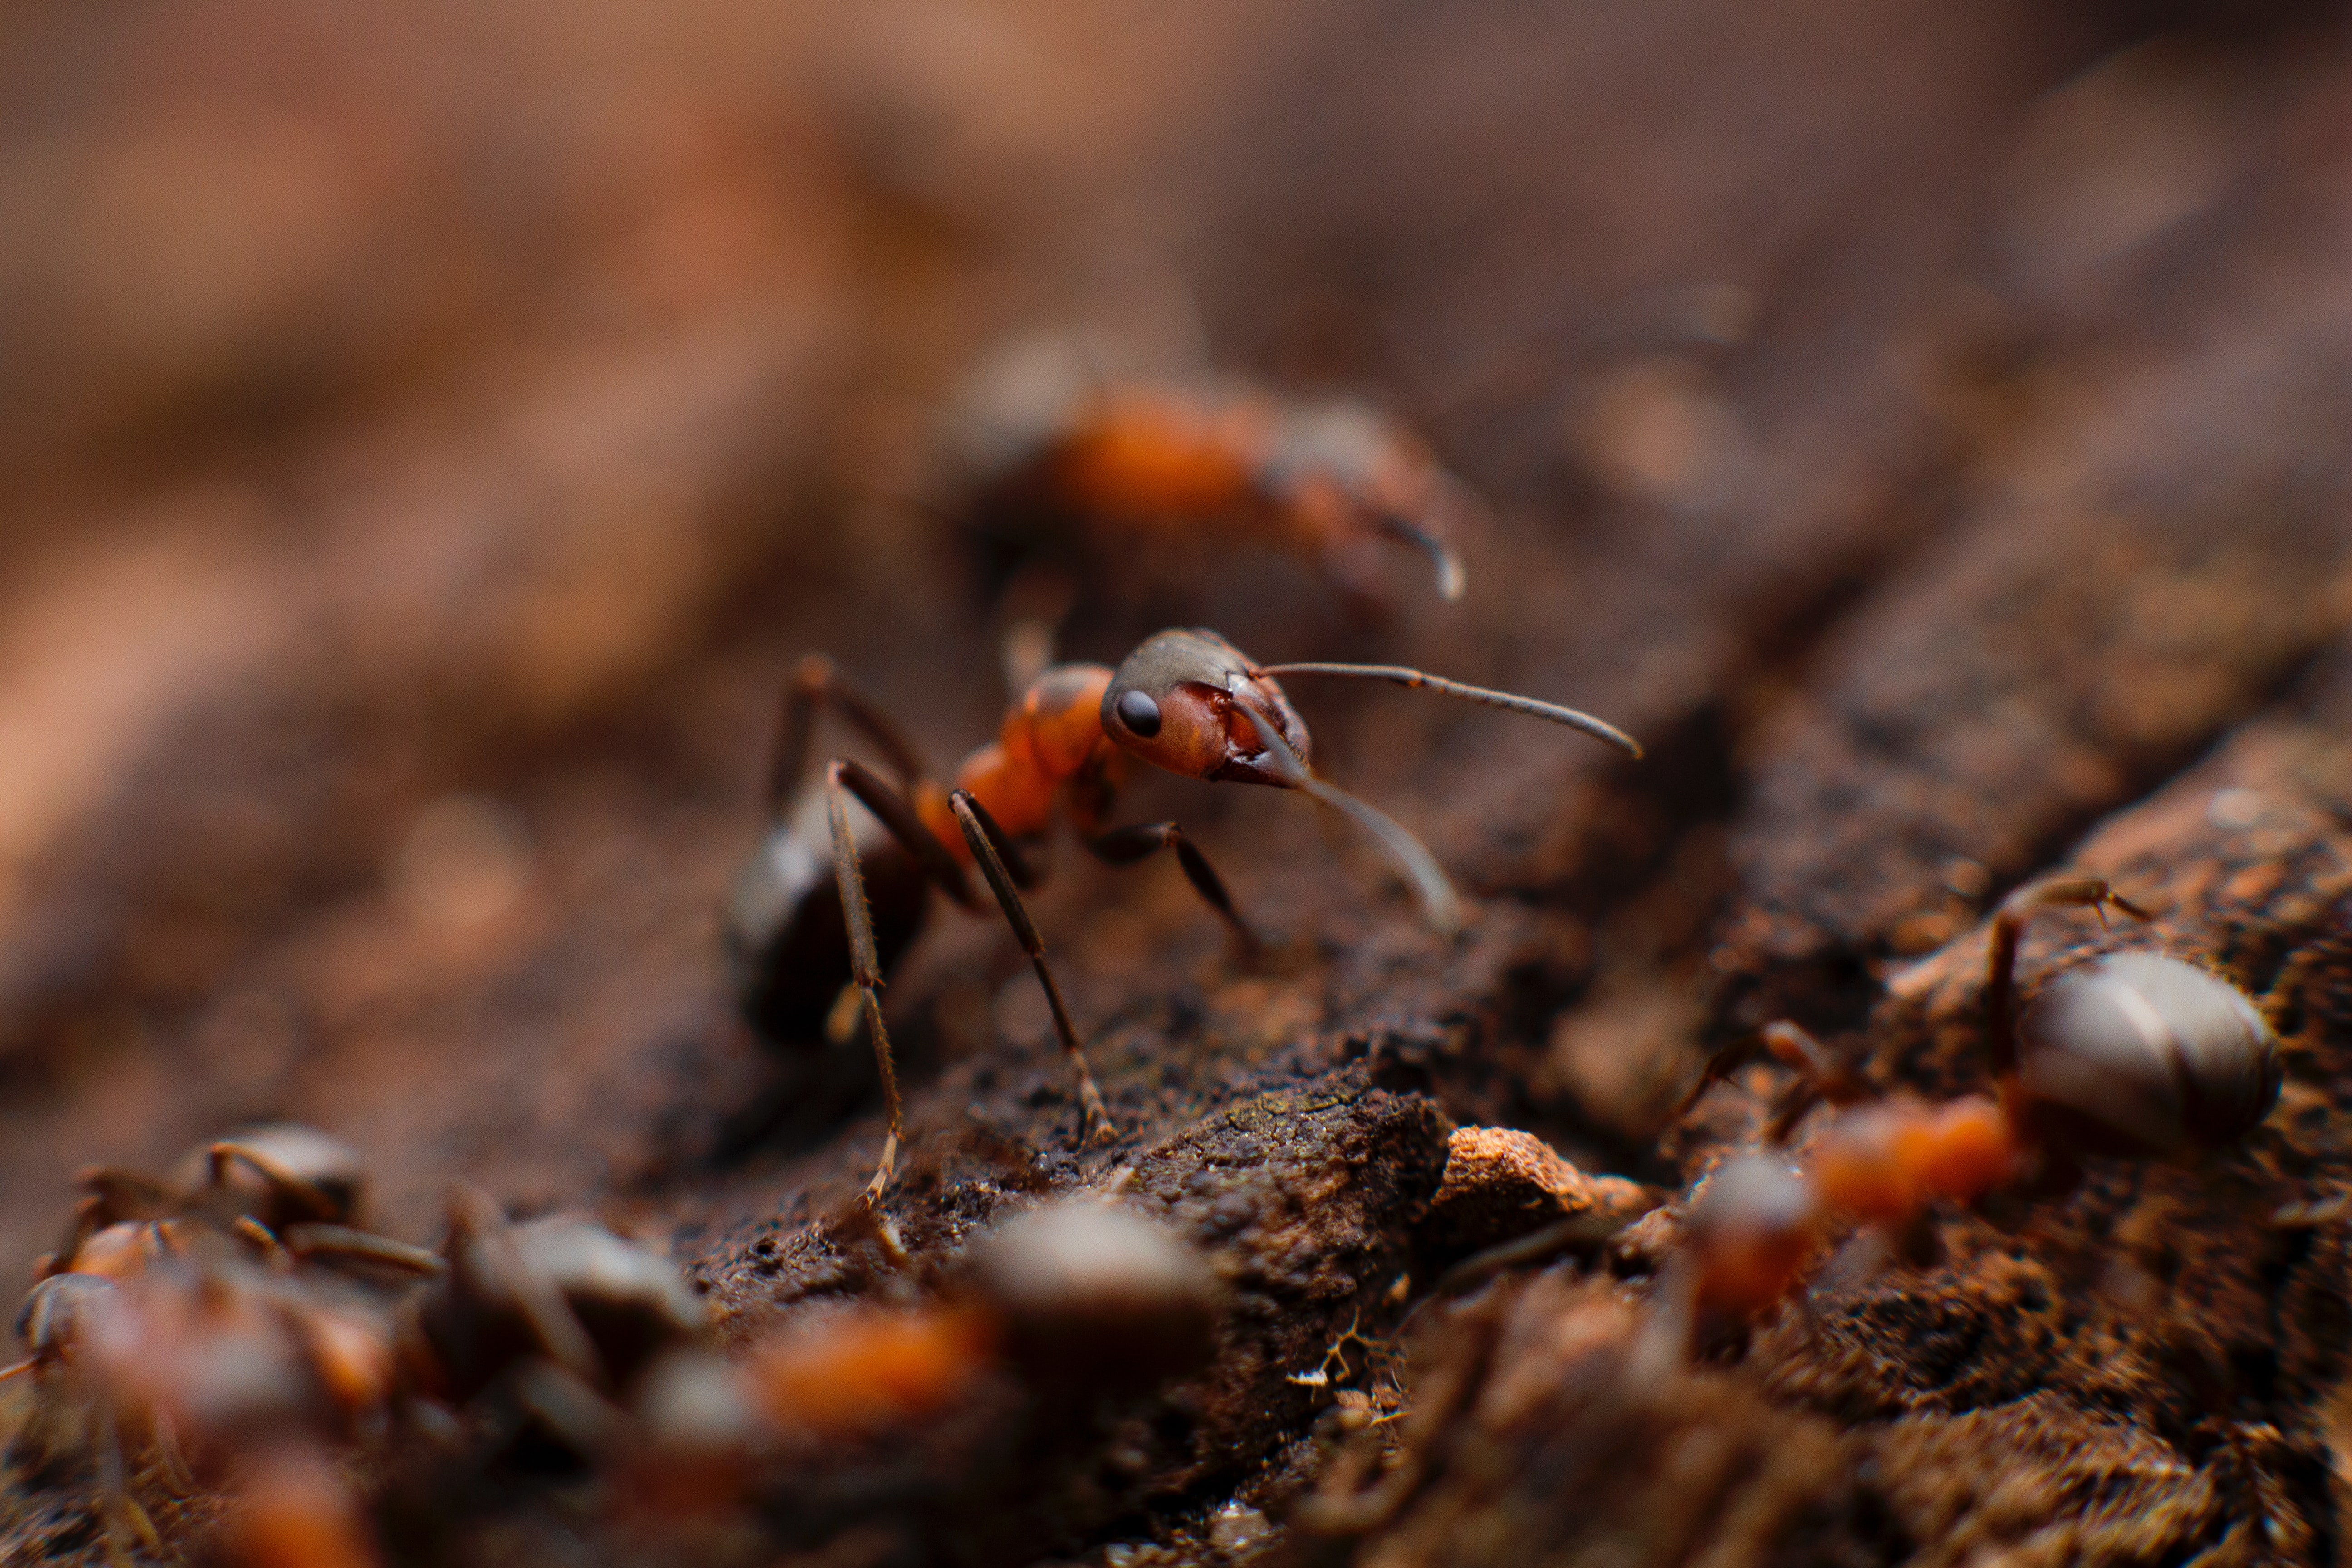 Photo of a group of ants by Mikhail Vasilyev on Unsplash